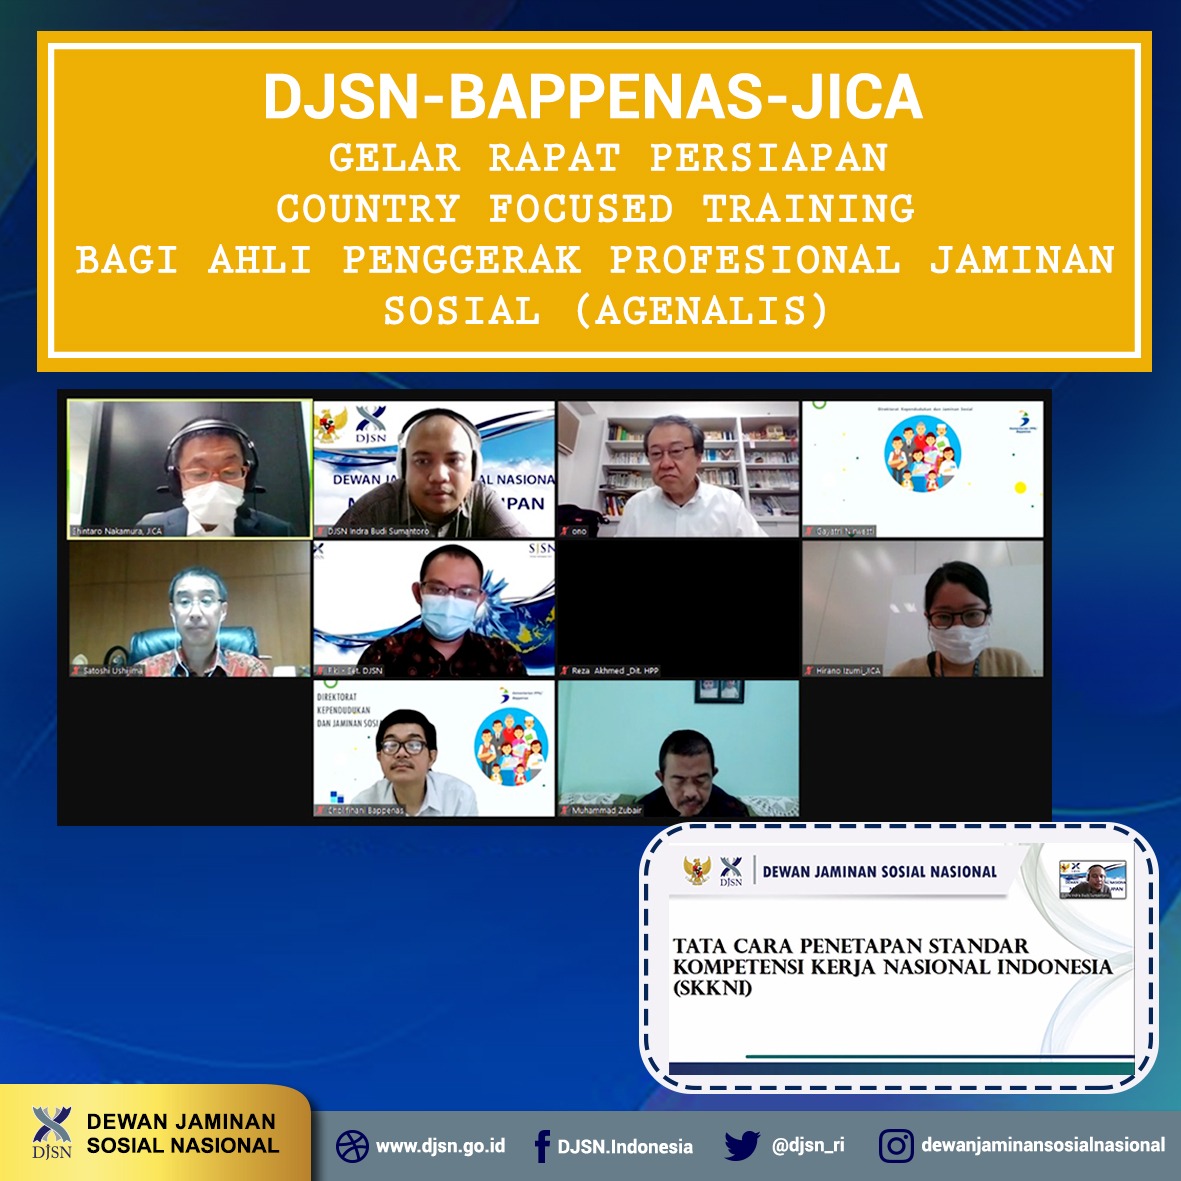 DJSN-Bappenas-JICA Gelar Rapat Persiapan Country Focused Training bagi Ahli Penggerak Profesional Jaminan Sosial (Agenalis)